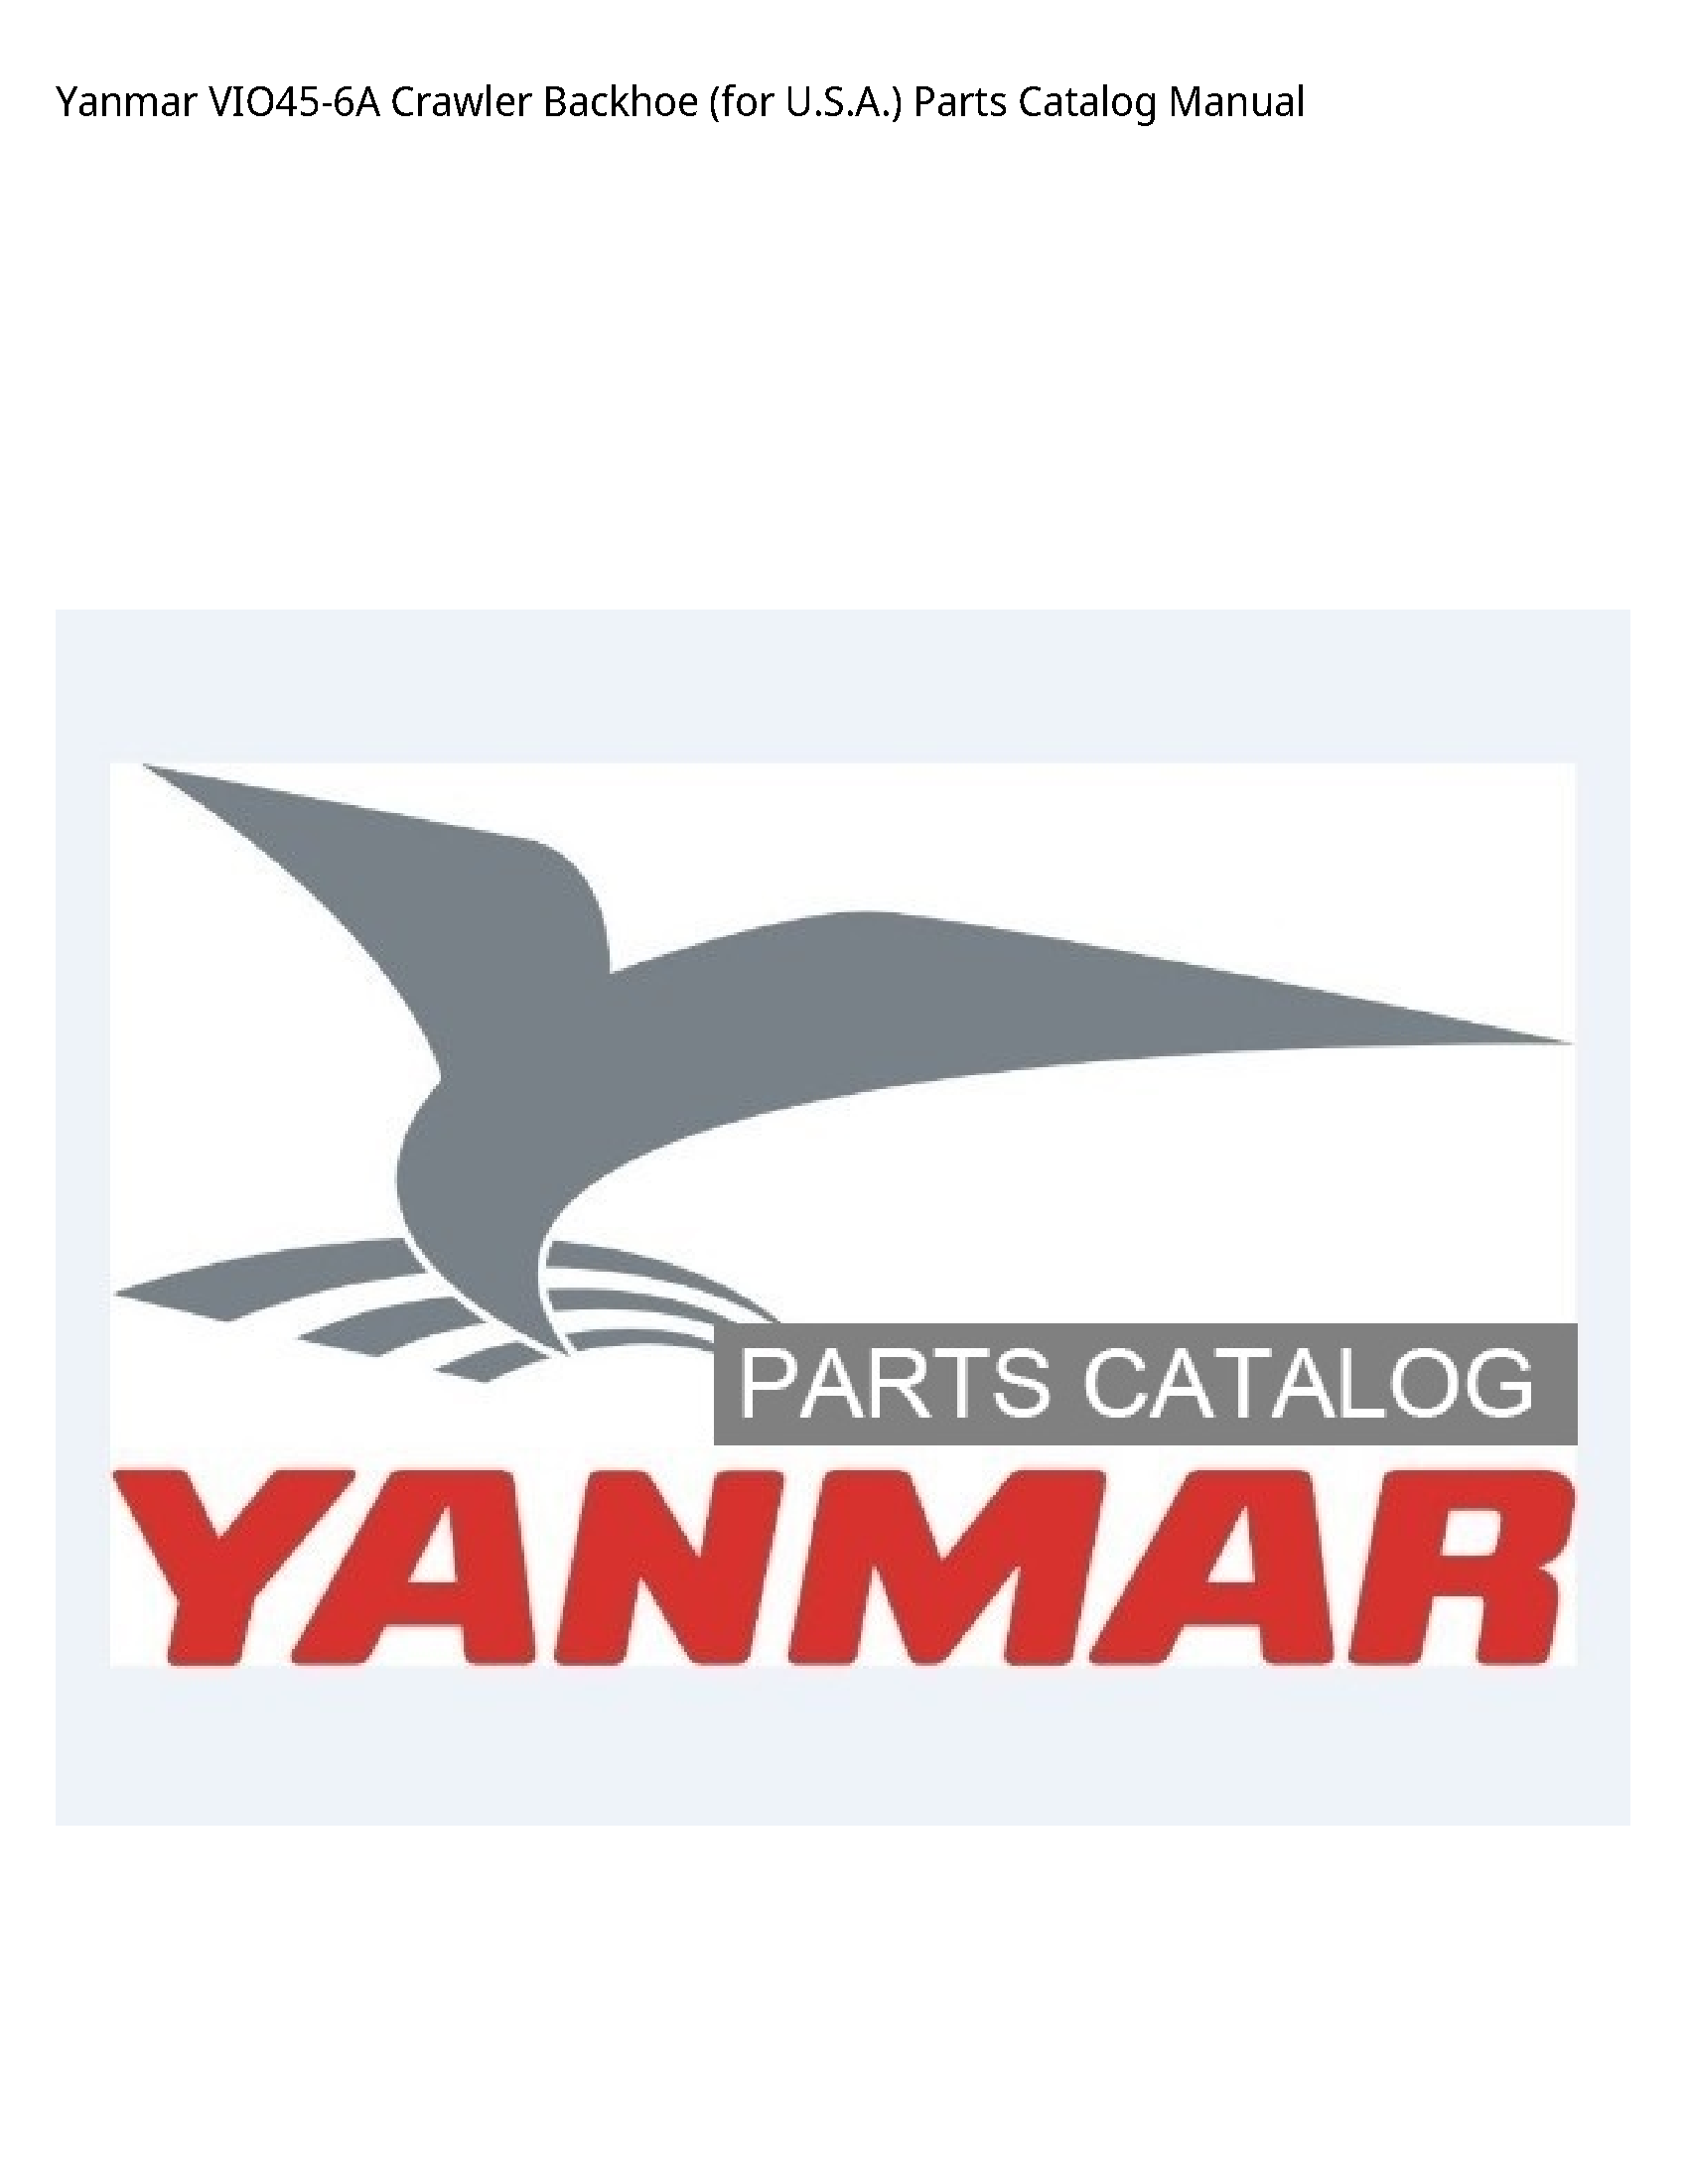 Yanmar VIO45-6A Crawler Backhoe (for U.S.A.) Parts Catalog manual